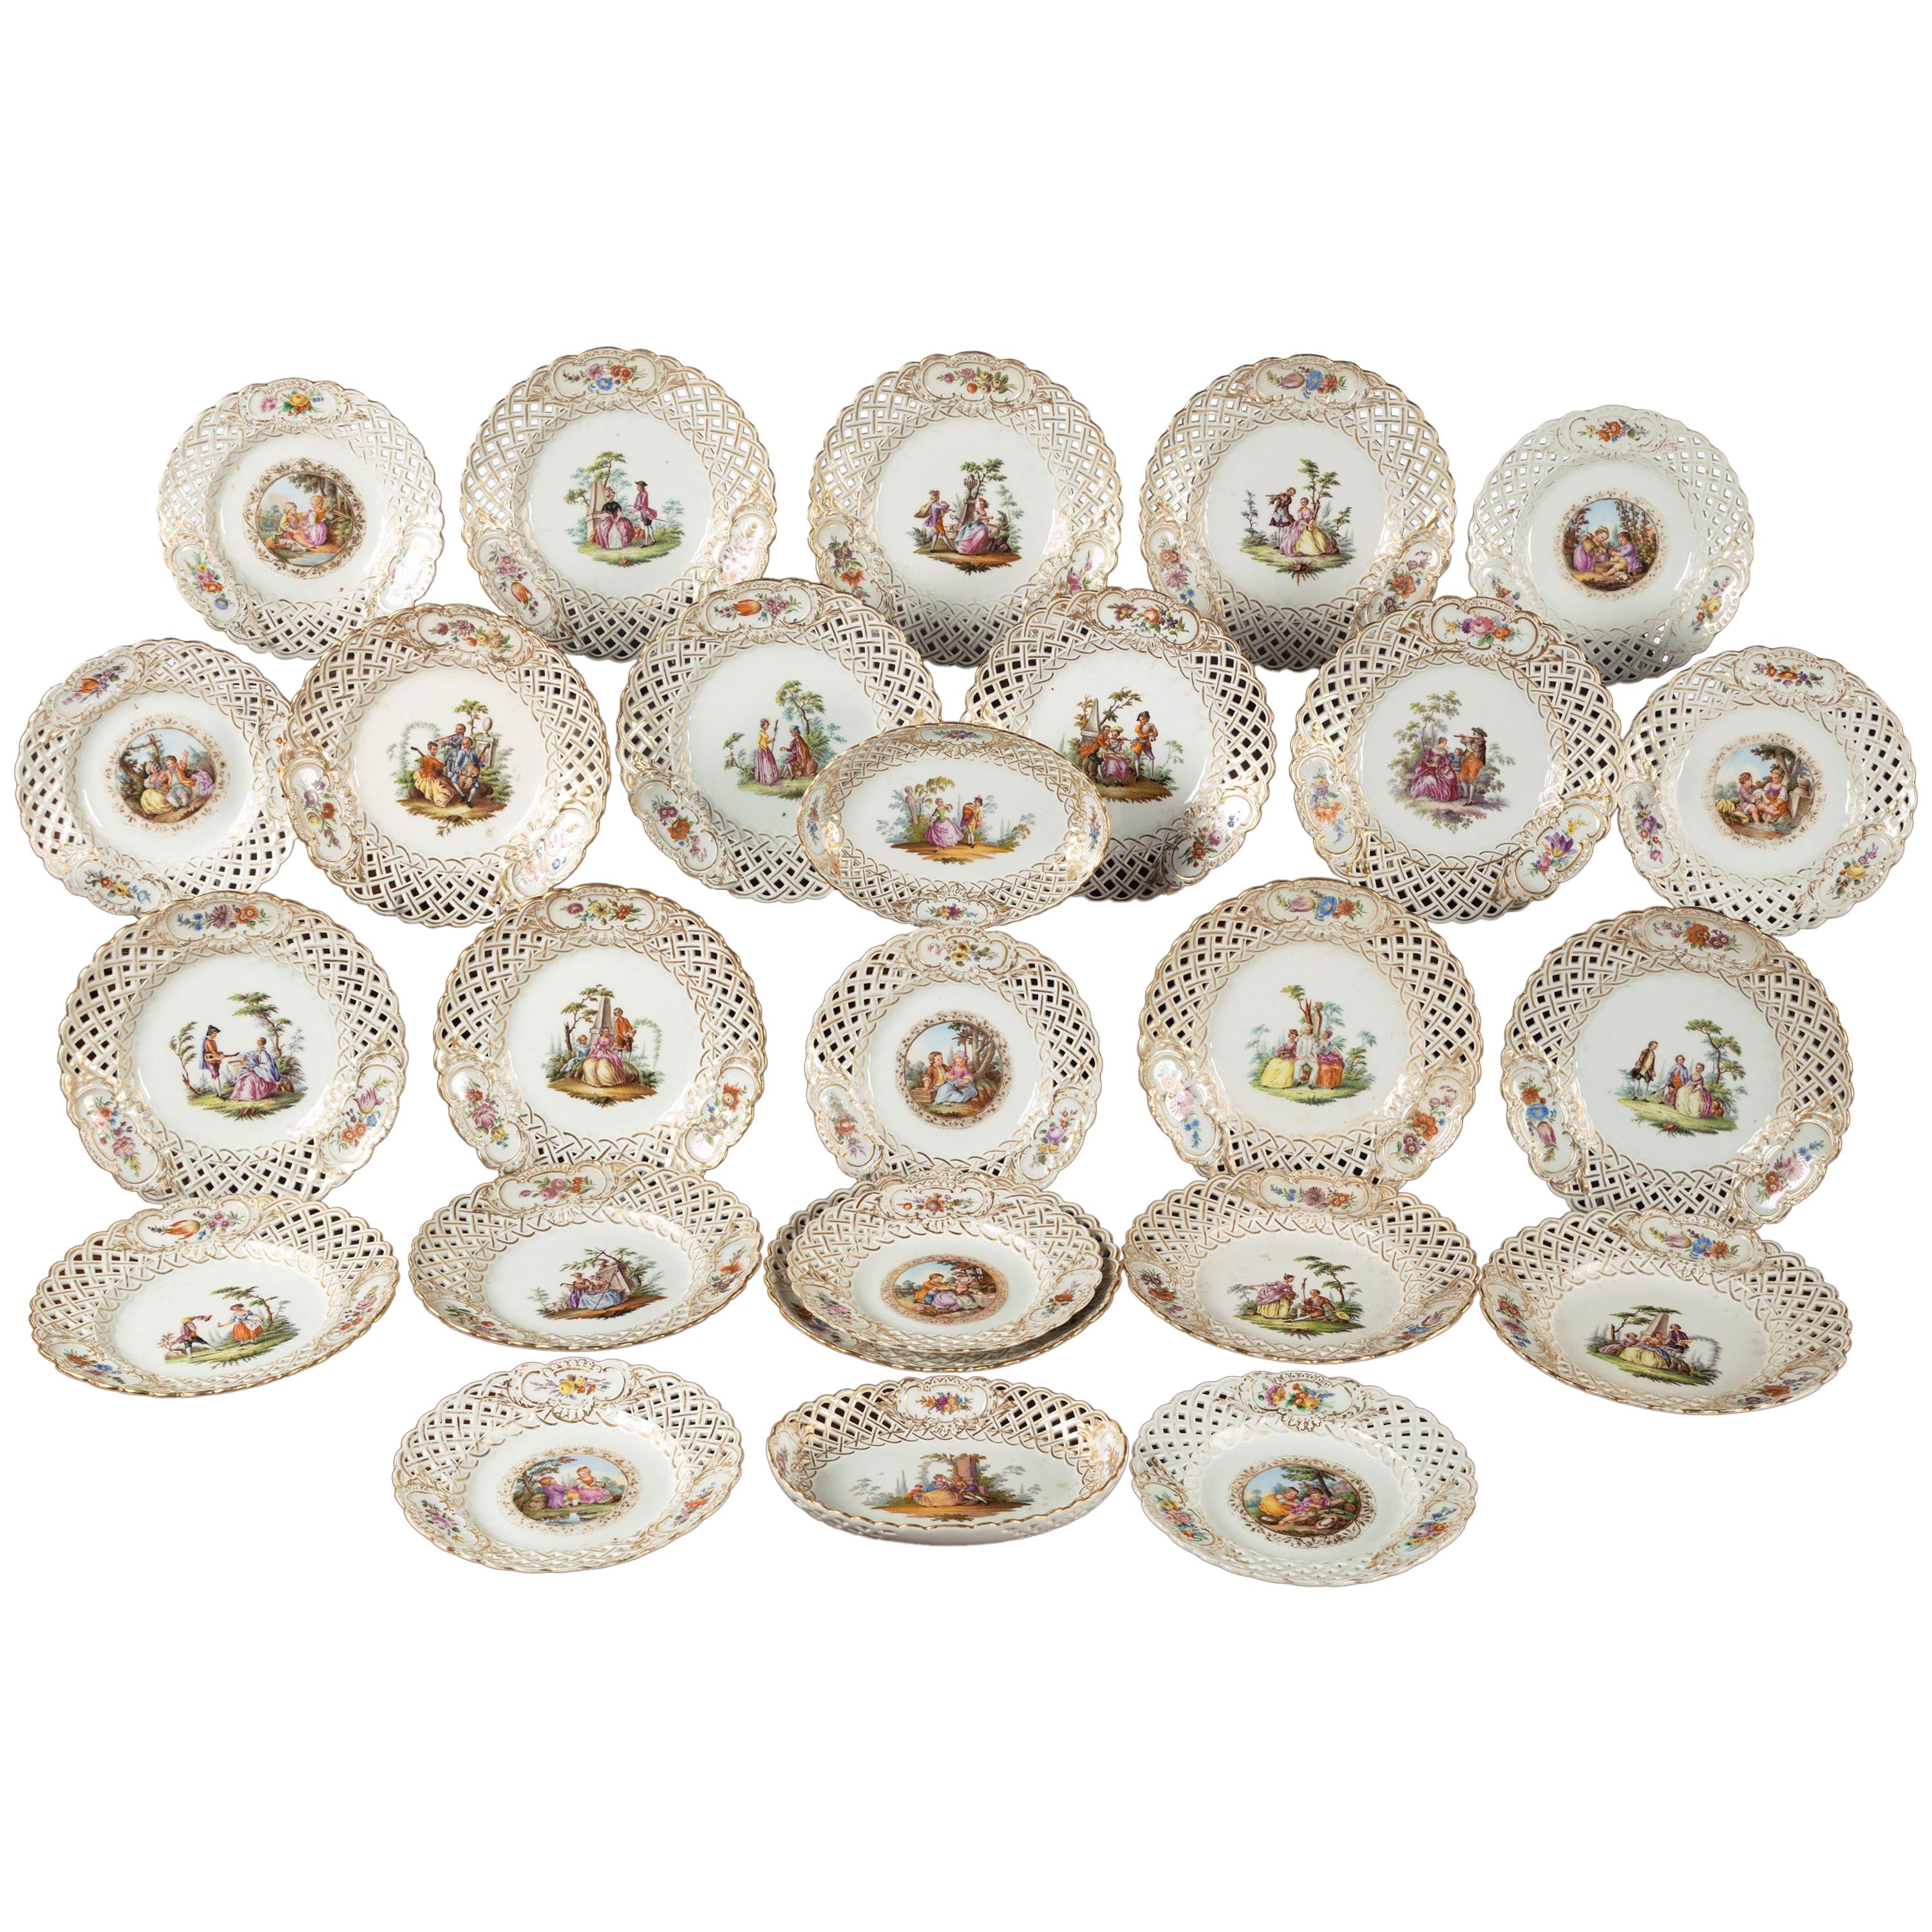 Good Late 19th Century Meissen Porcelain Dessert Service